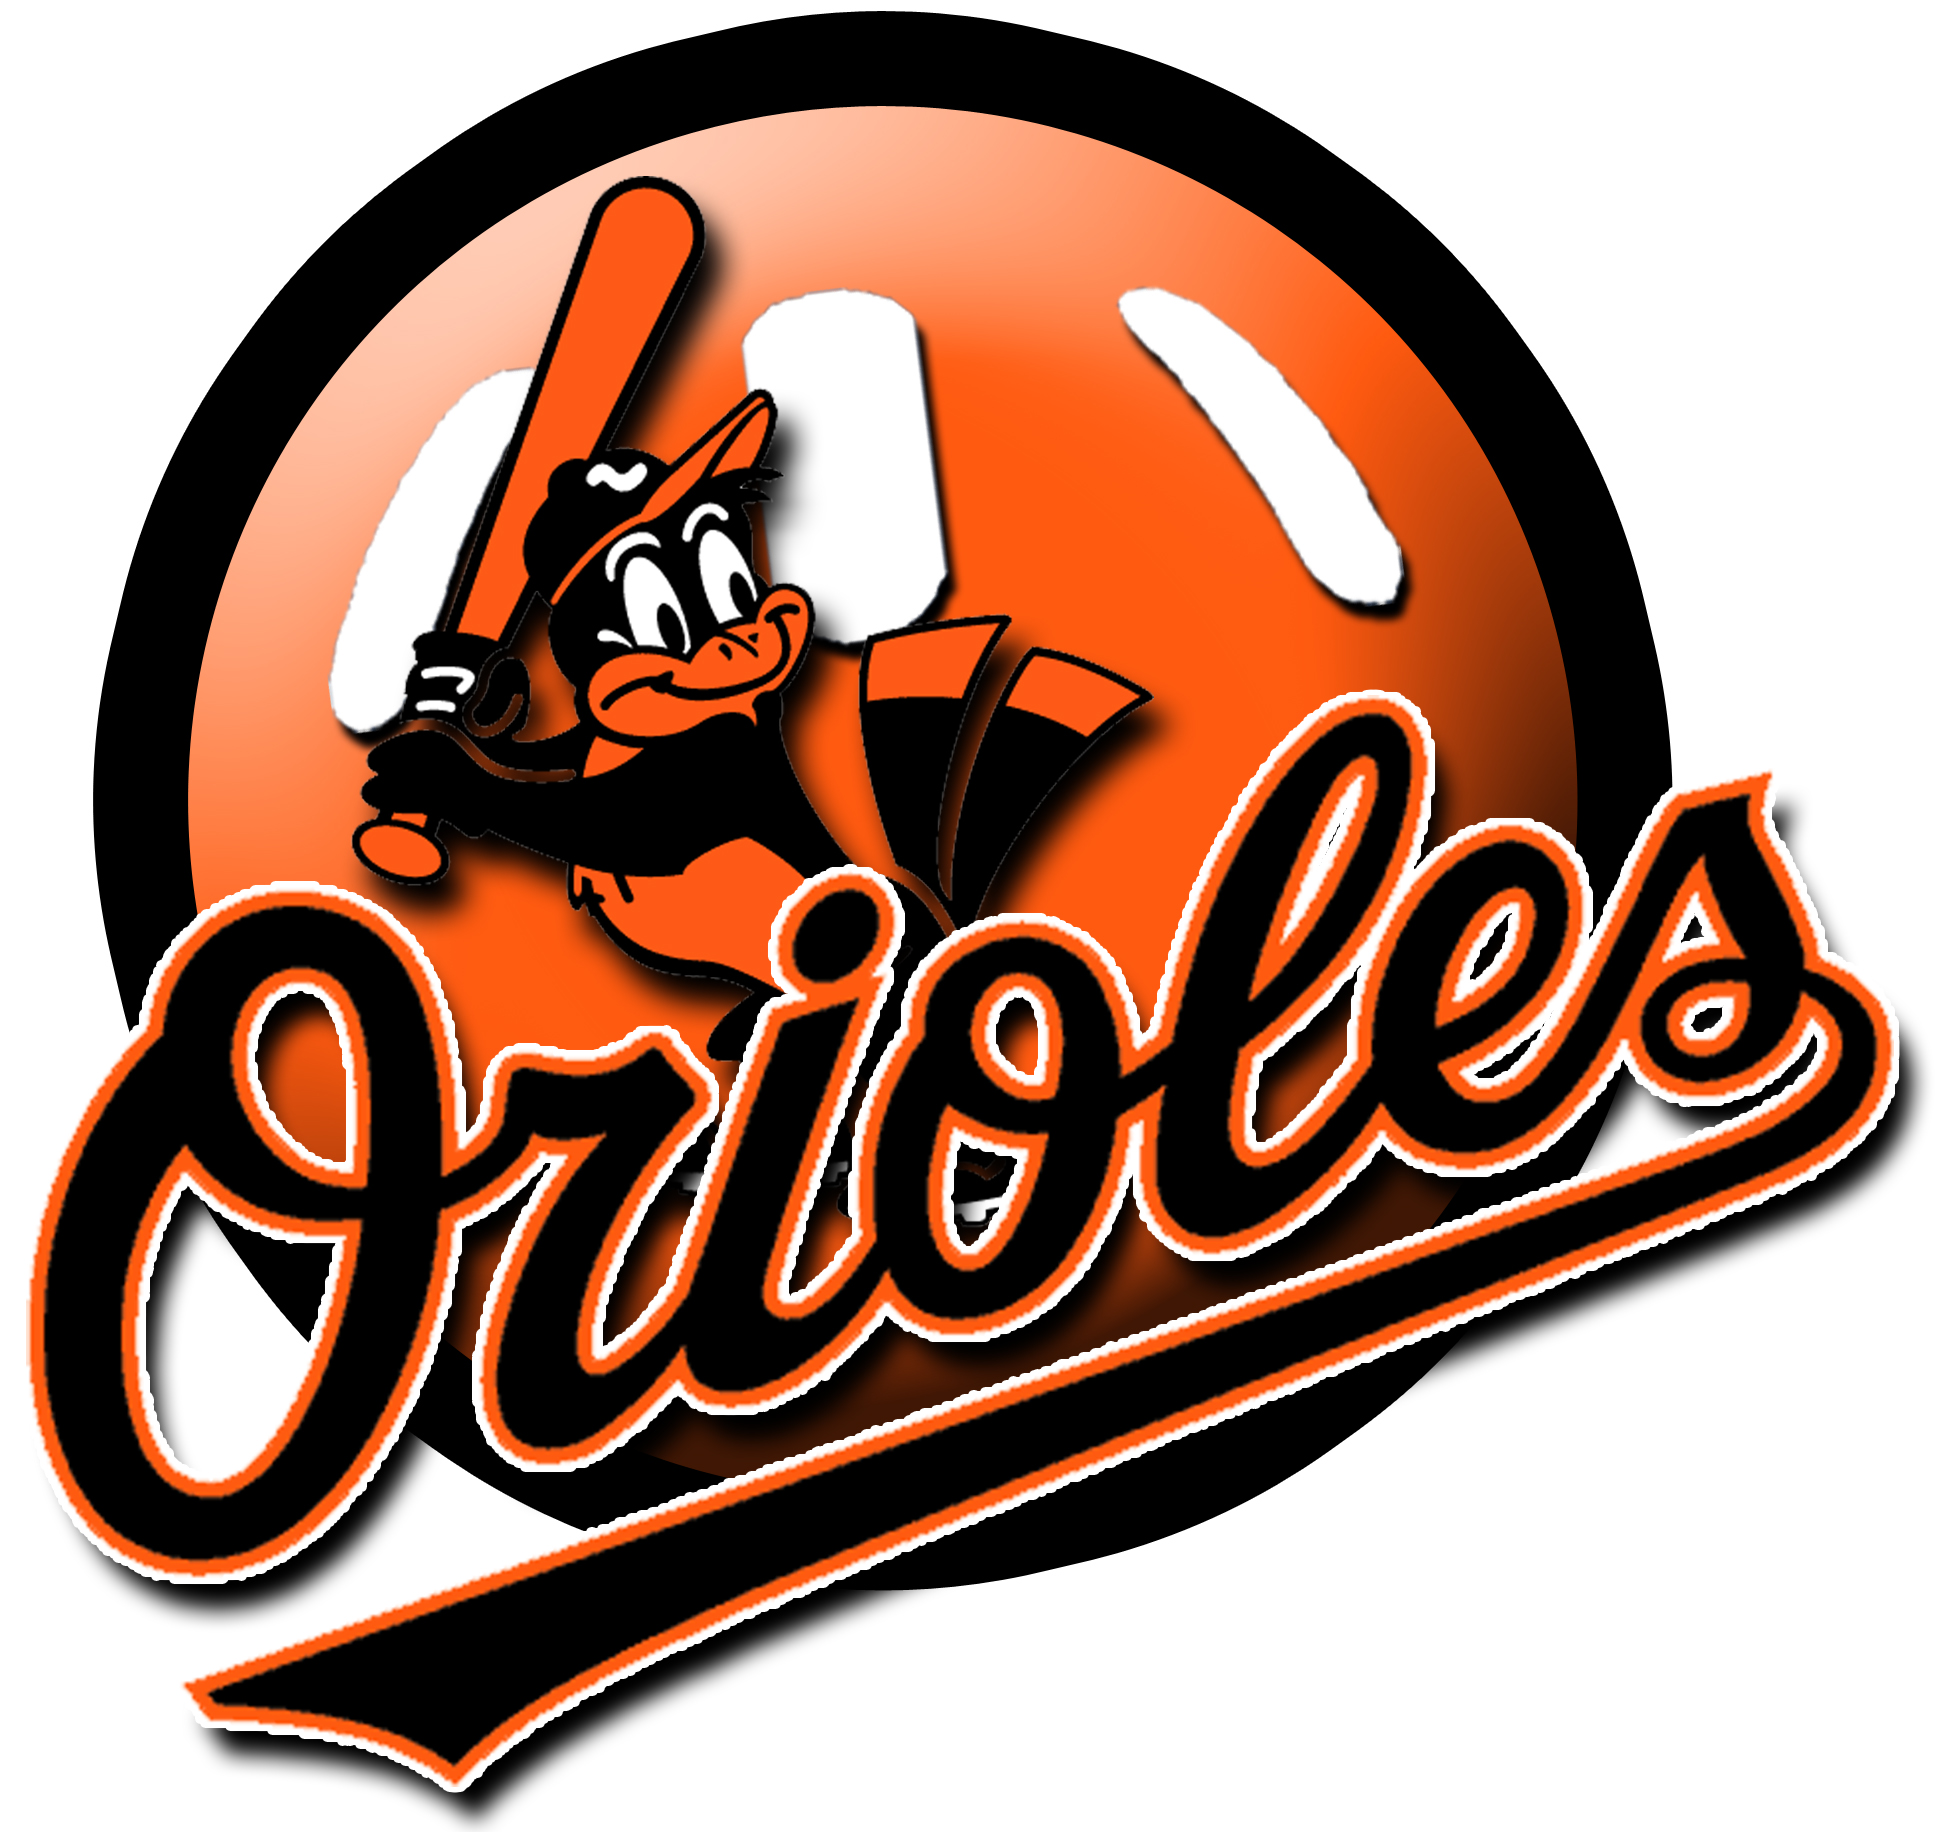 Baltimore Orioles Logo Image Crazy Gallery